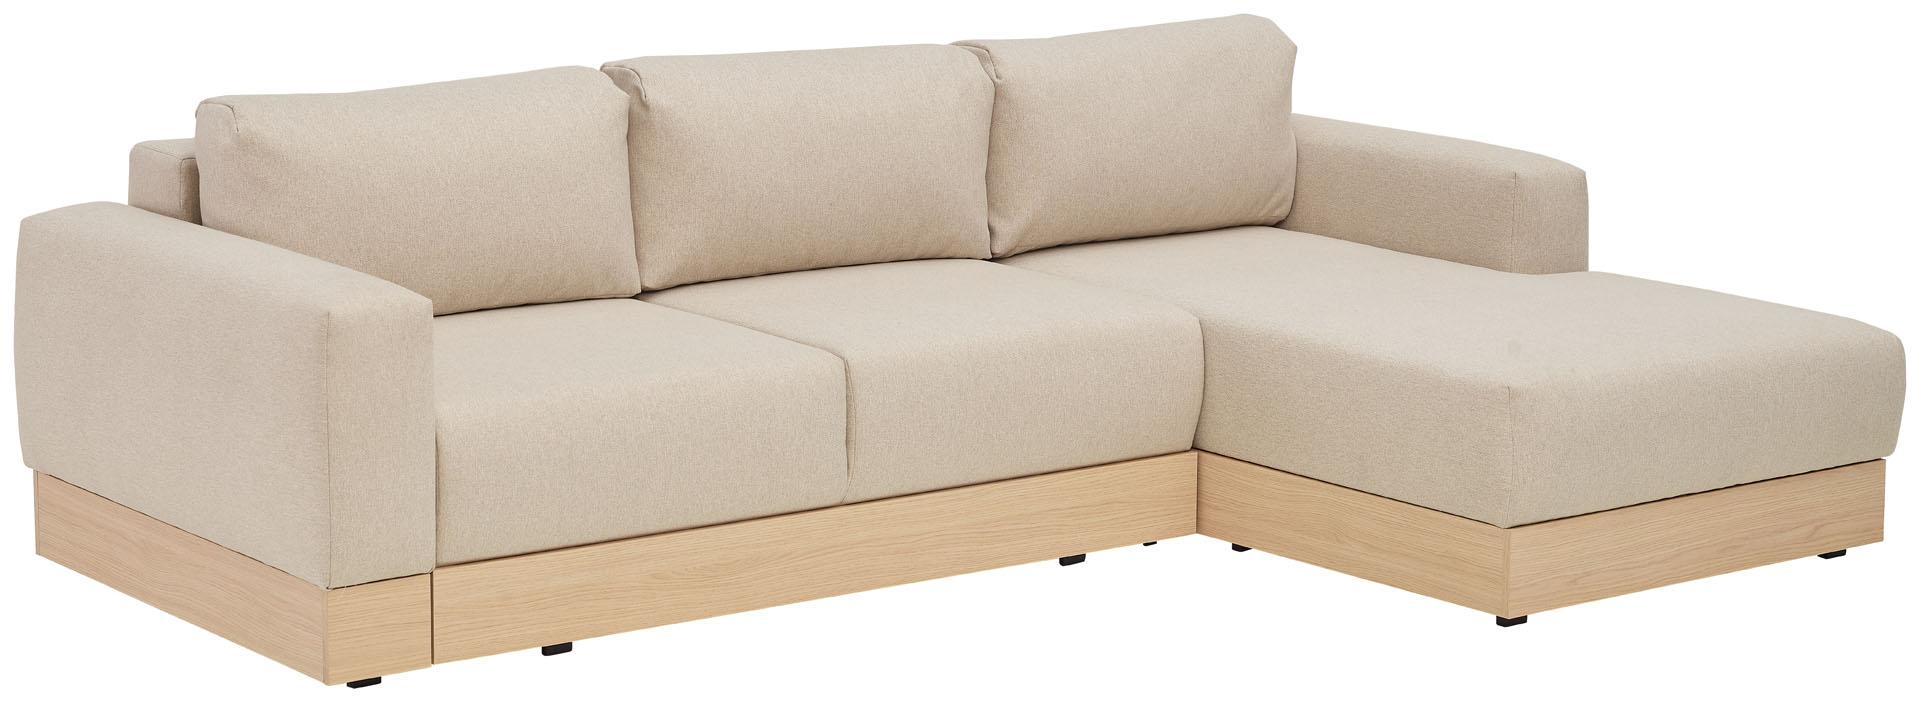 Corner sofa with decorative trim Stello